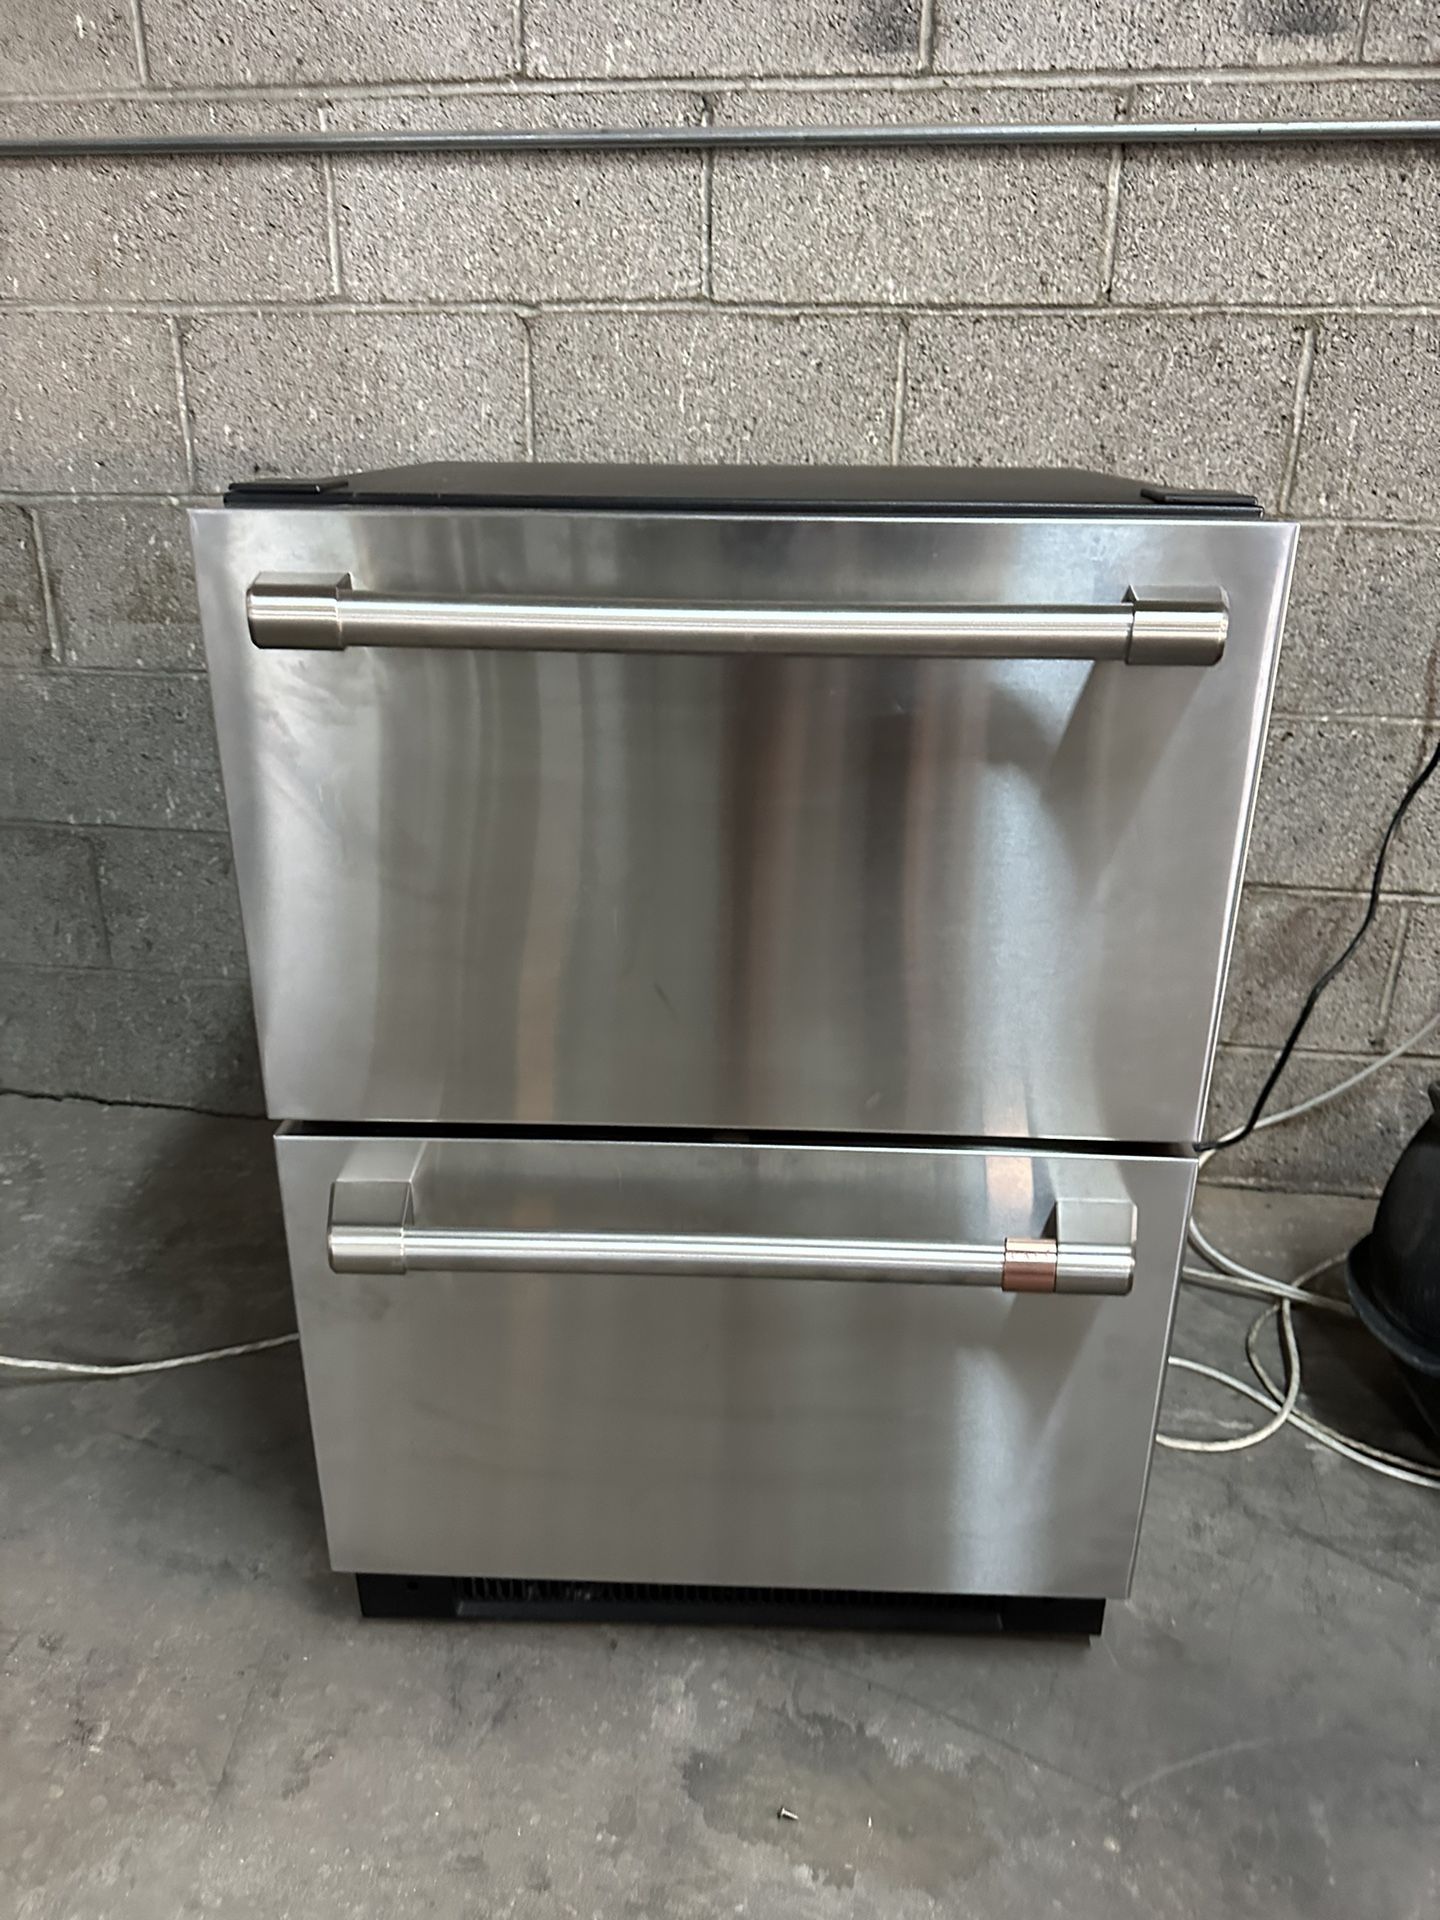 New GE café Undercounter Refrigerator 